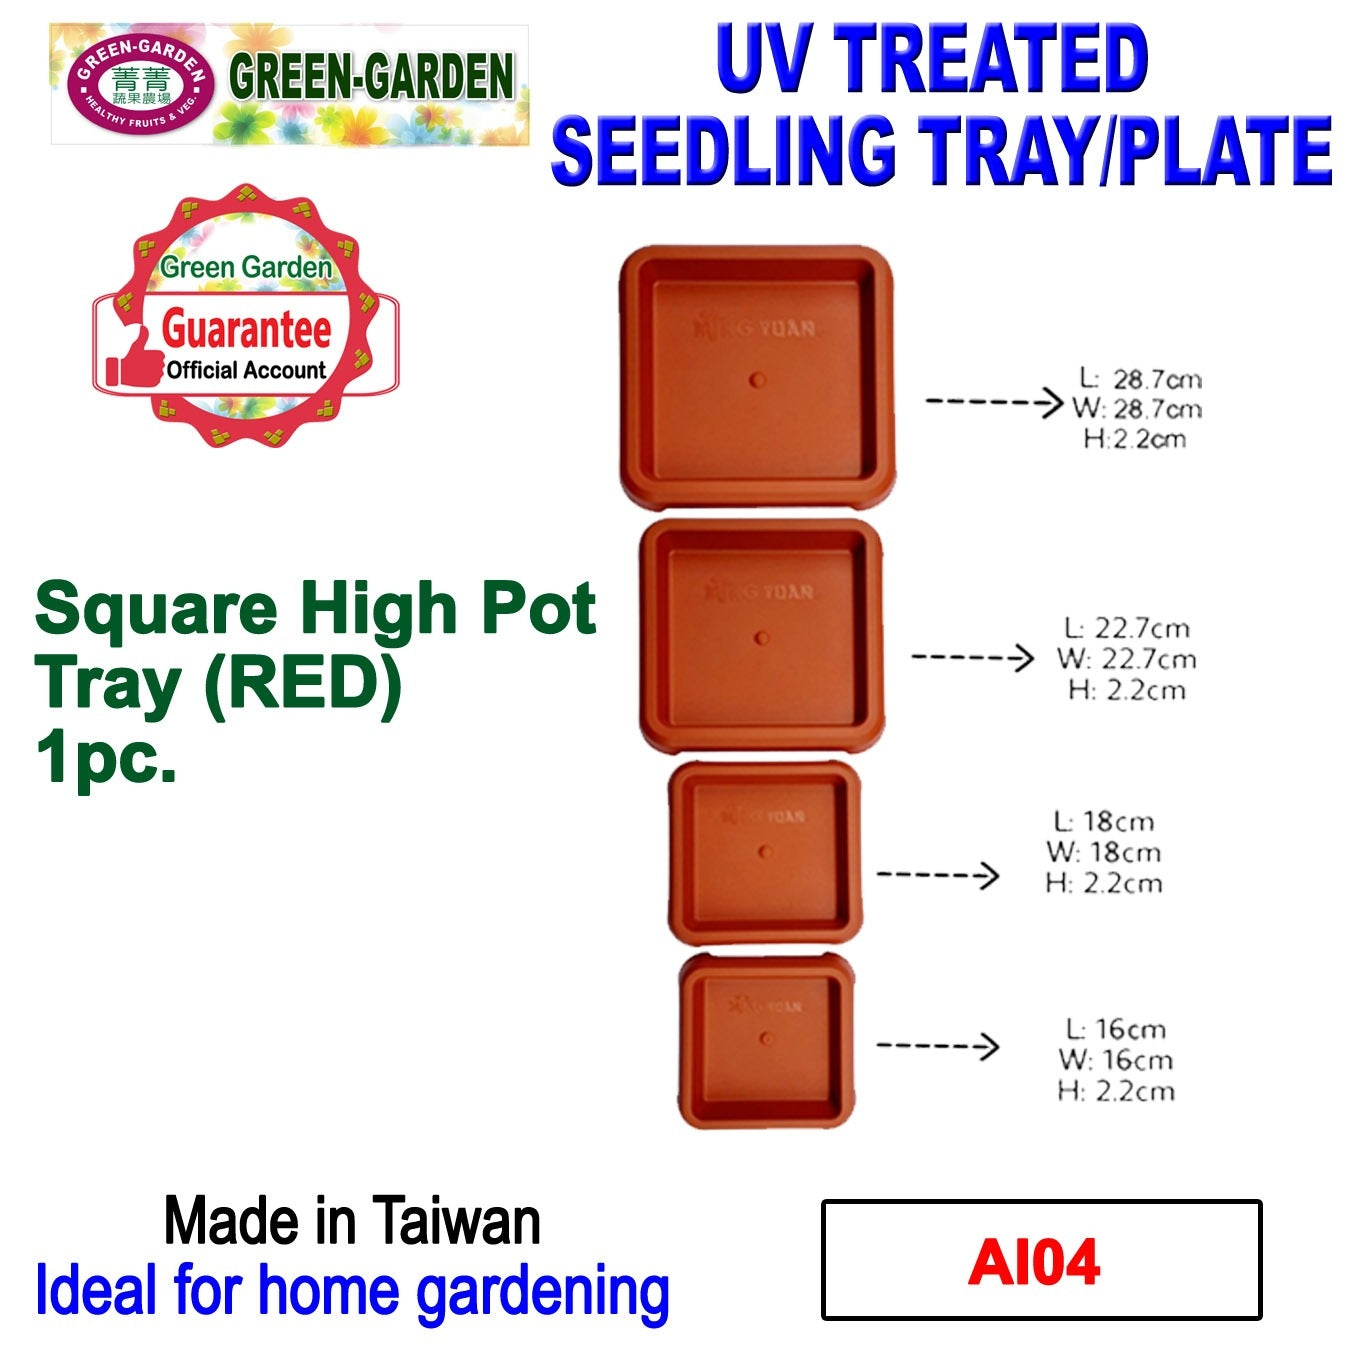 UV TREATED Square High Pot Tray Size: 22.7x22.7x2.2cm